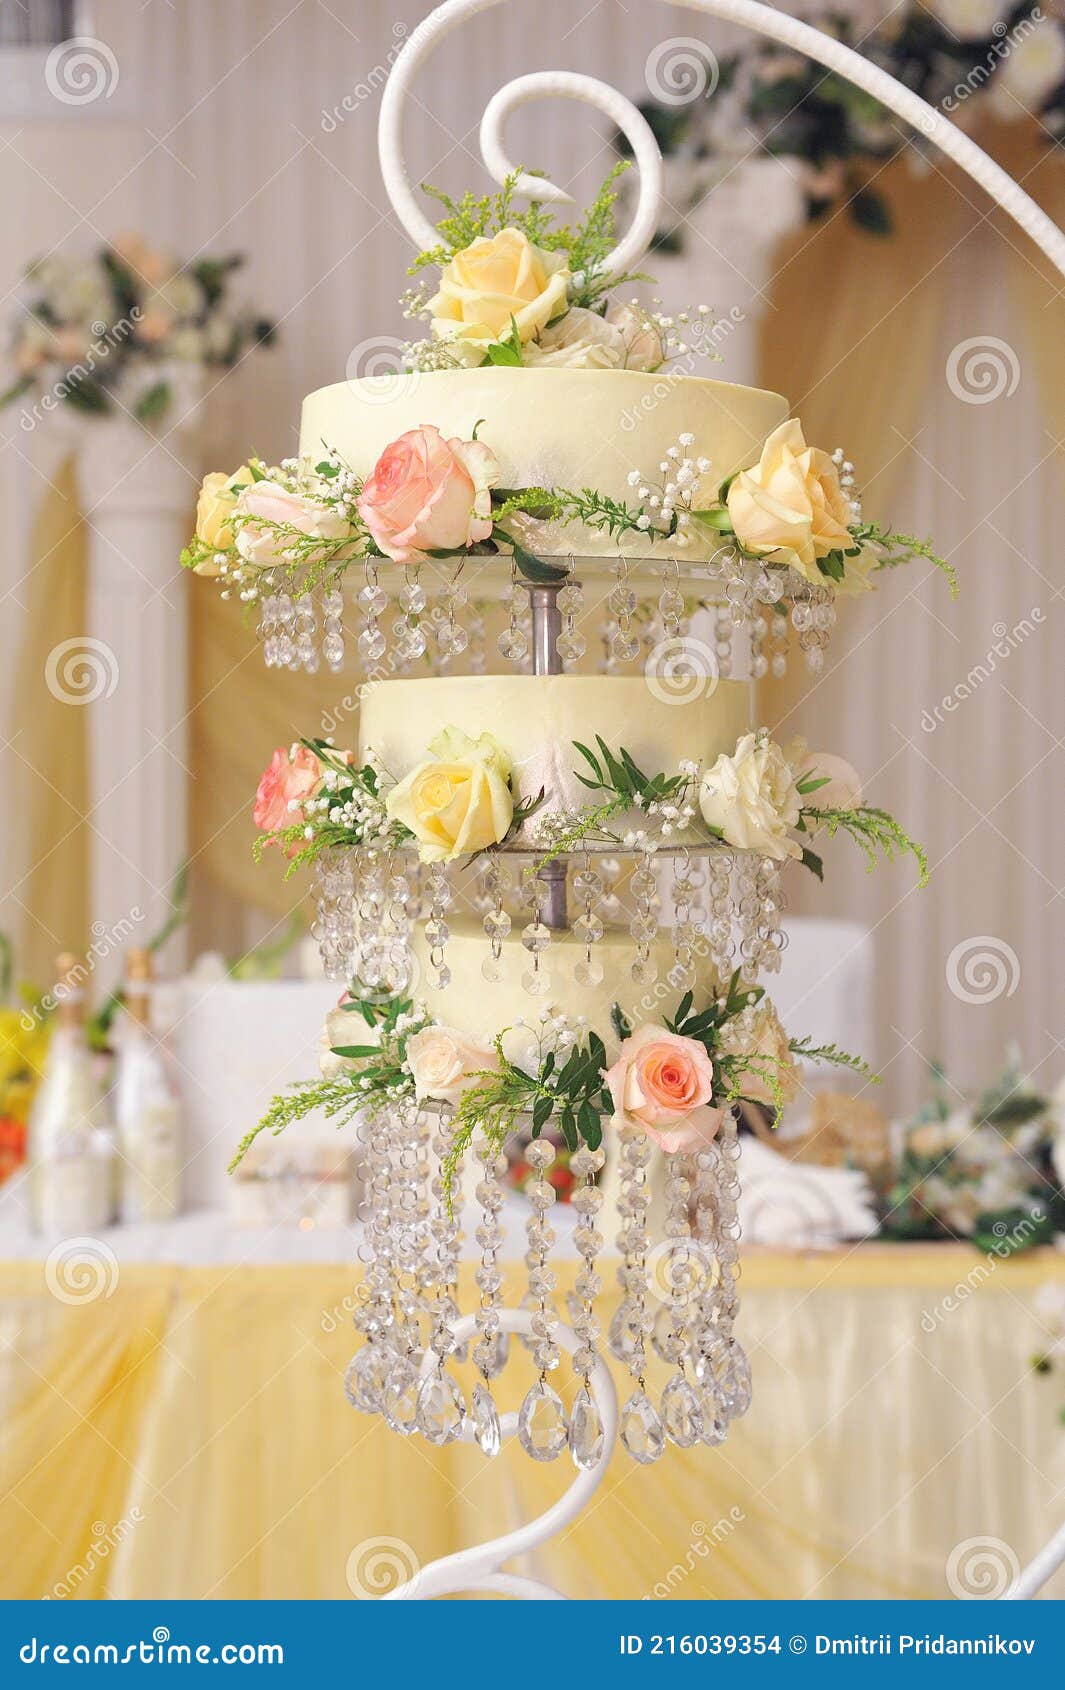 Flower cake: 6 consigli per una torta nuziale decorata con fiori freschi